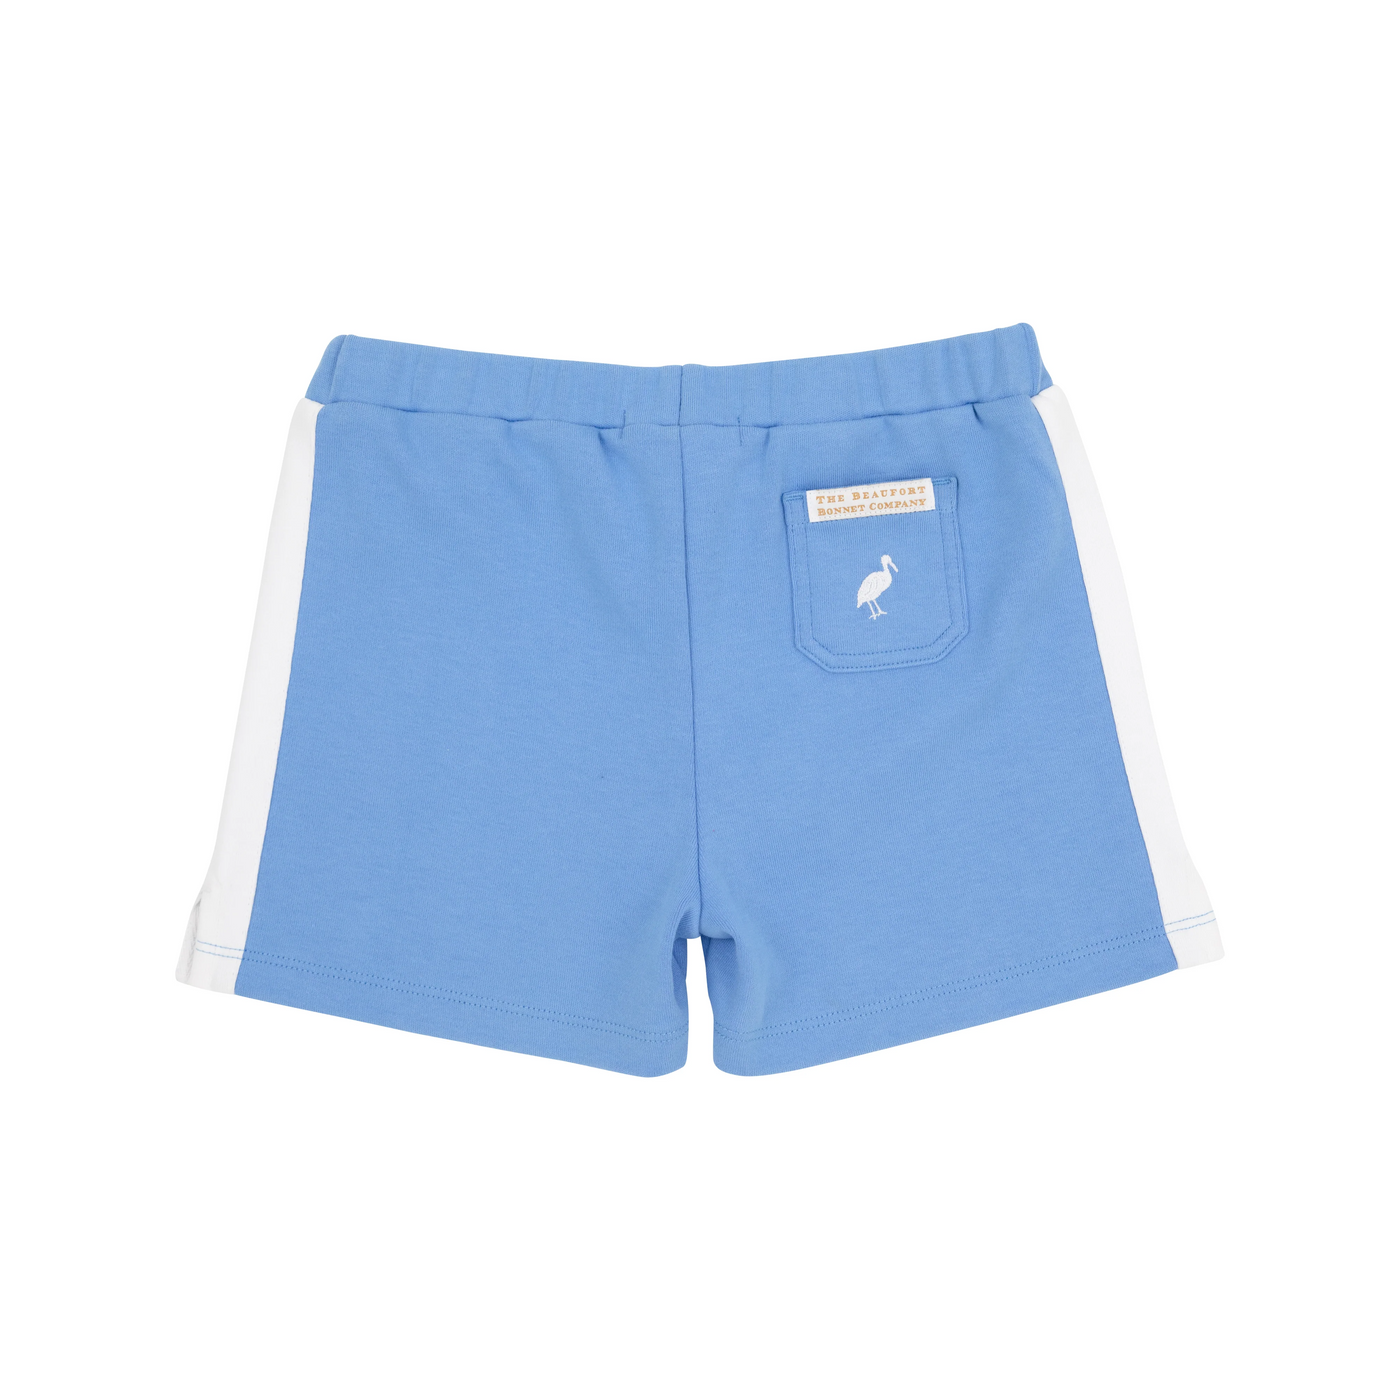 Shaefer Shorts - Barbados Blue With Worth Avenue White